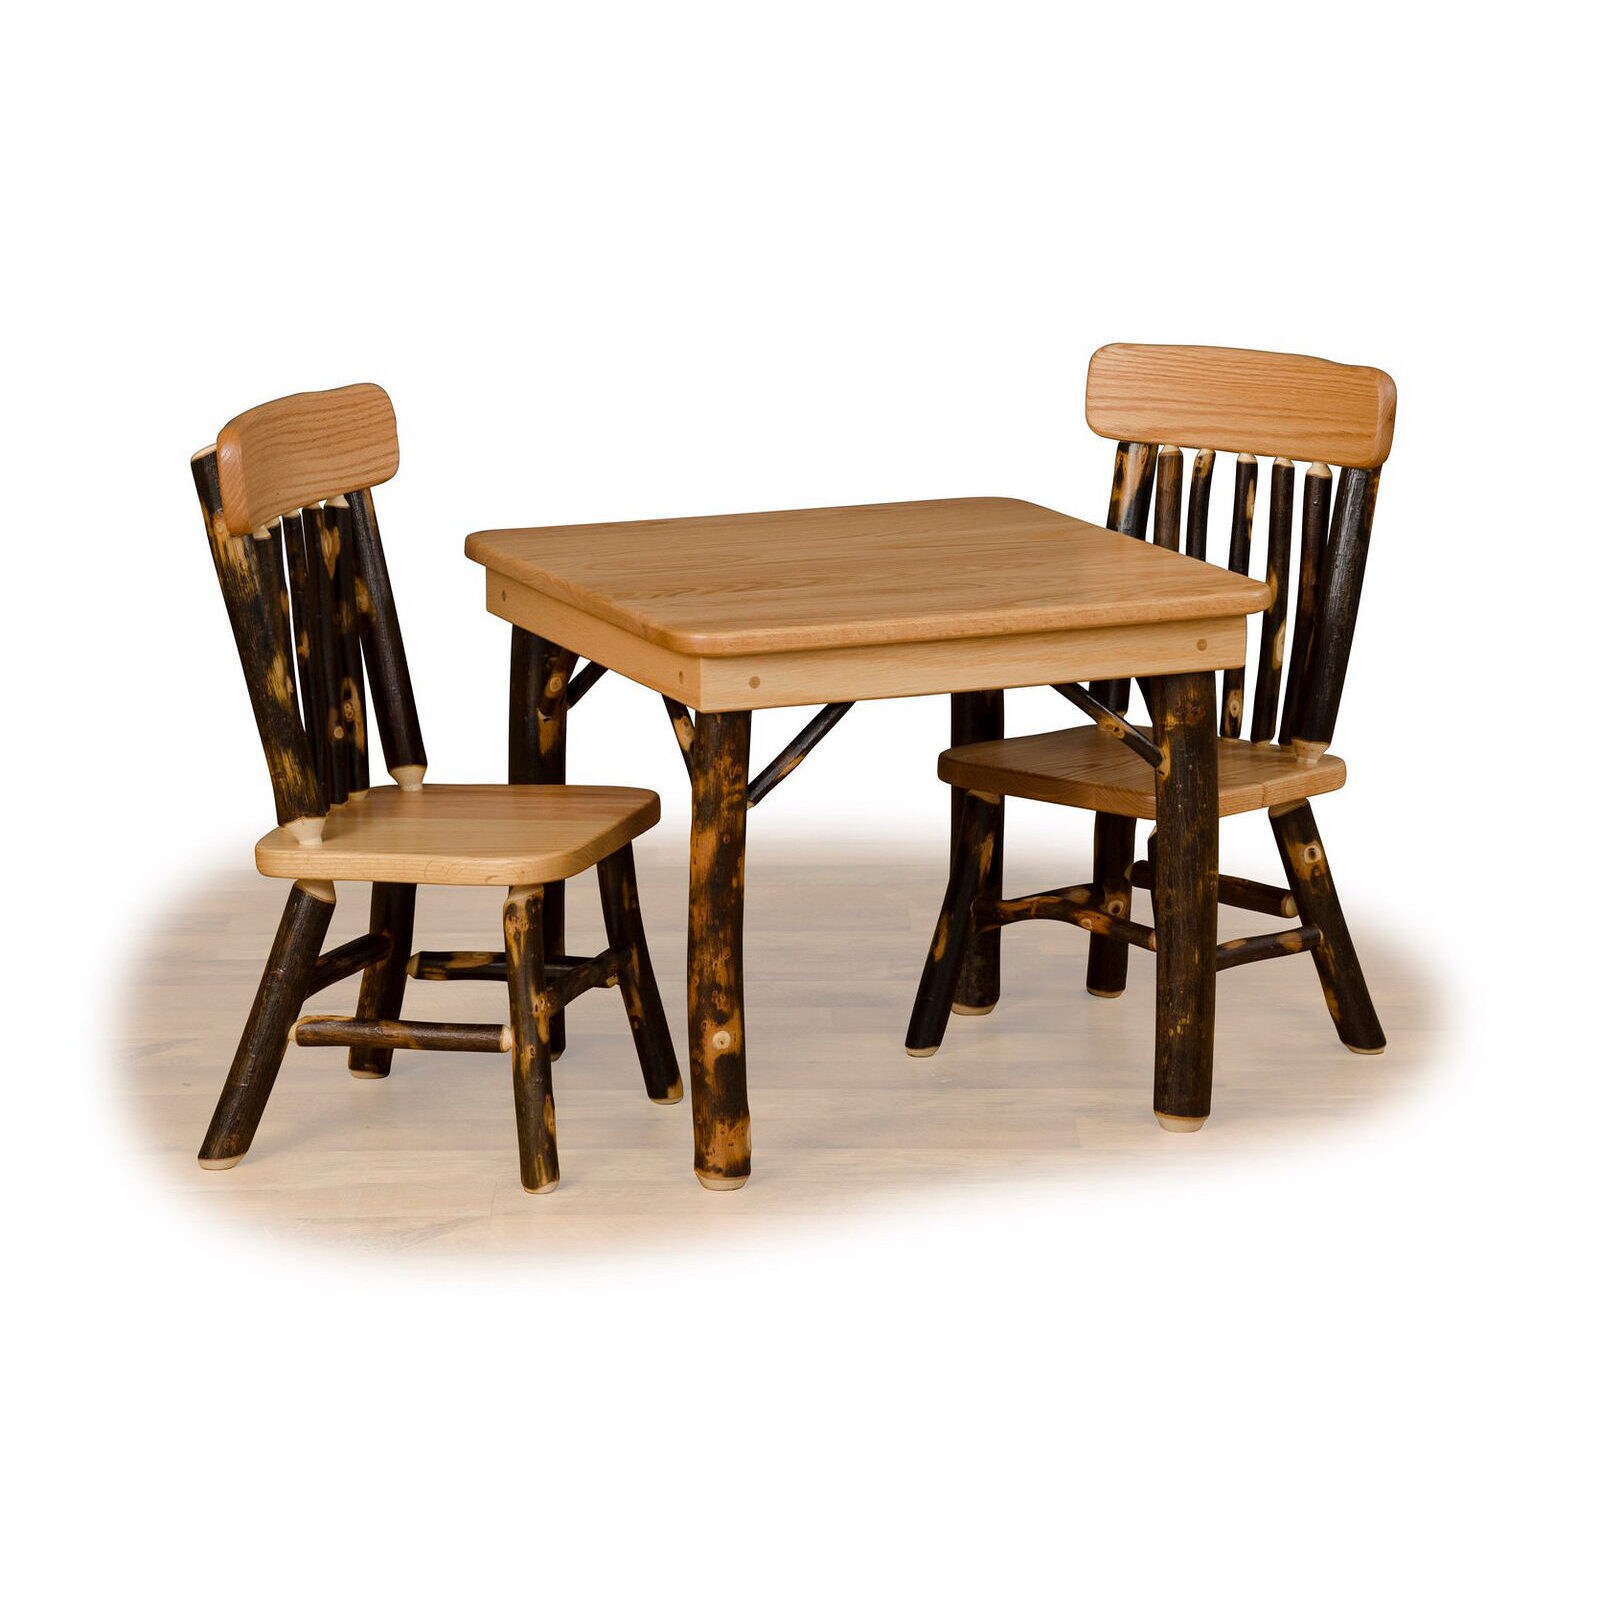 children's chair & table set